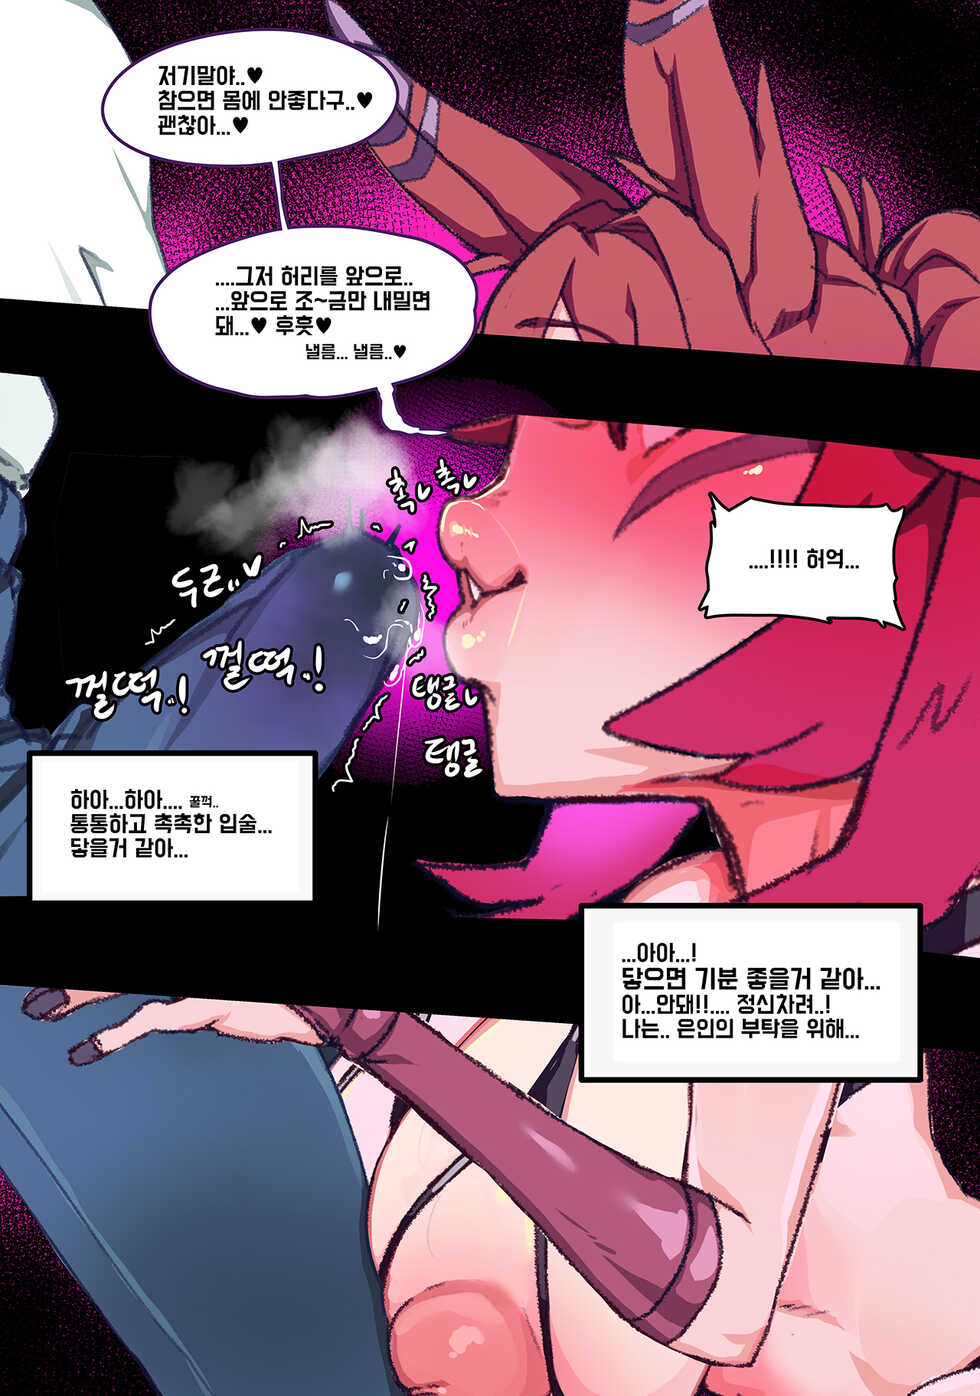 [3000 krw] LOL-Xayah-EP3 (League of Legends) [Korean] - Page 36